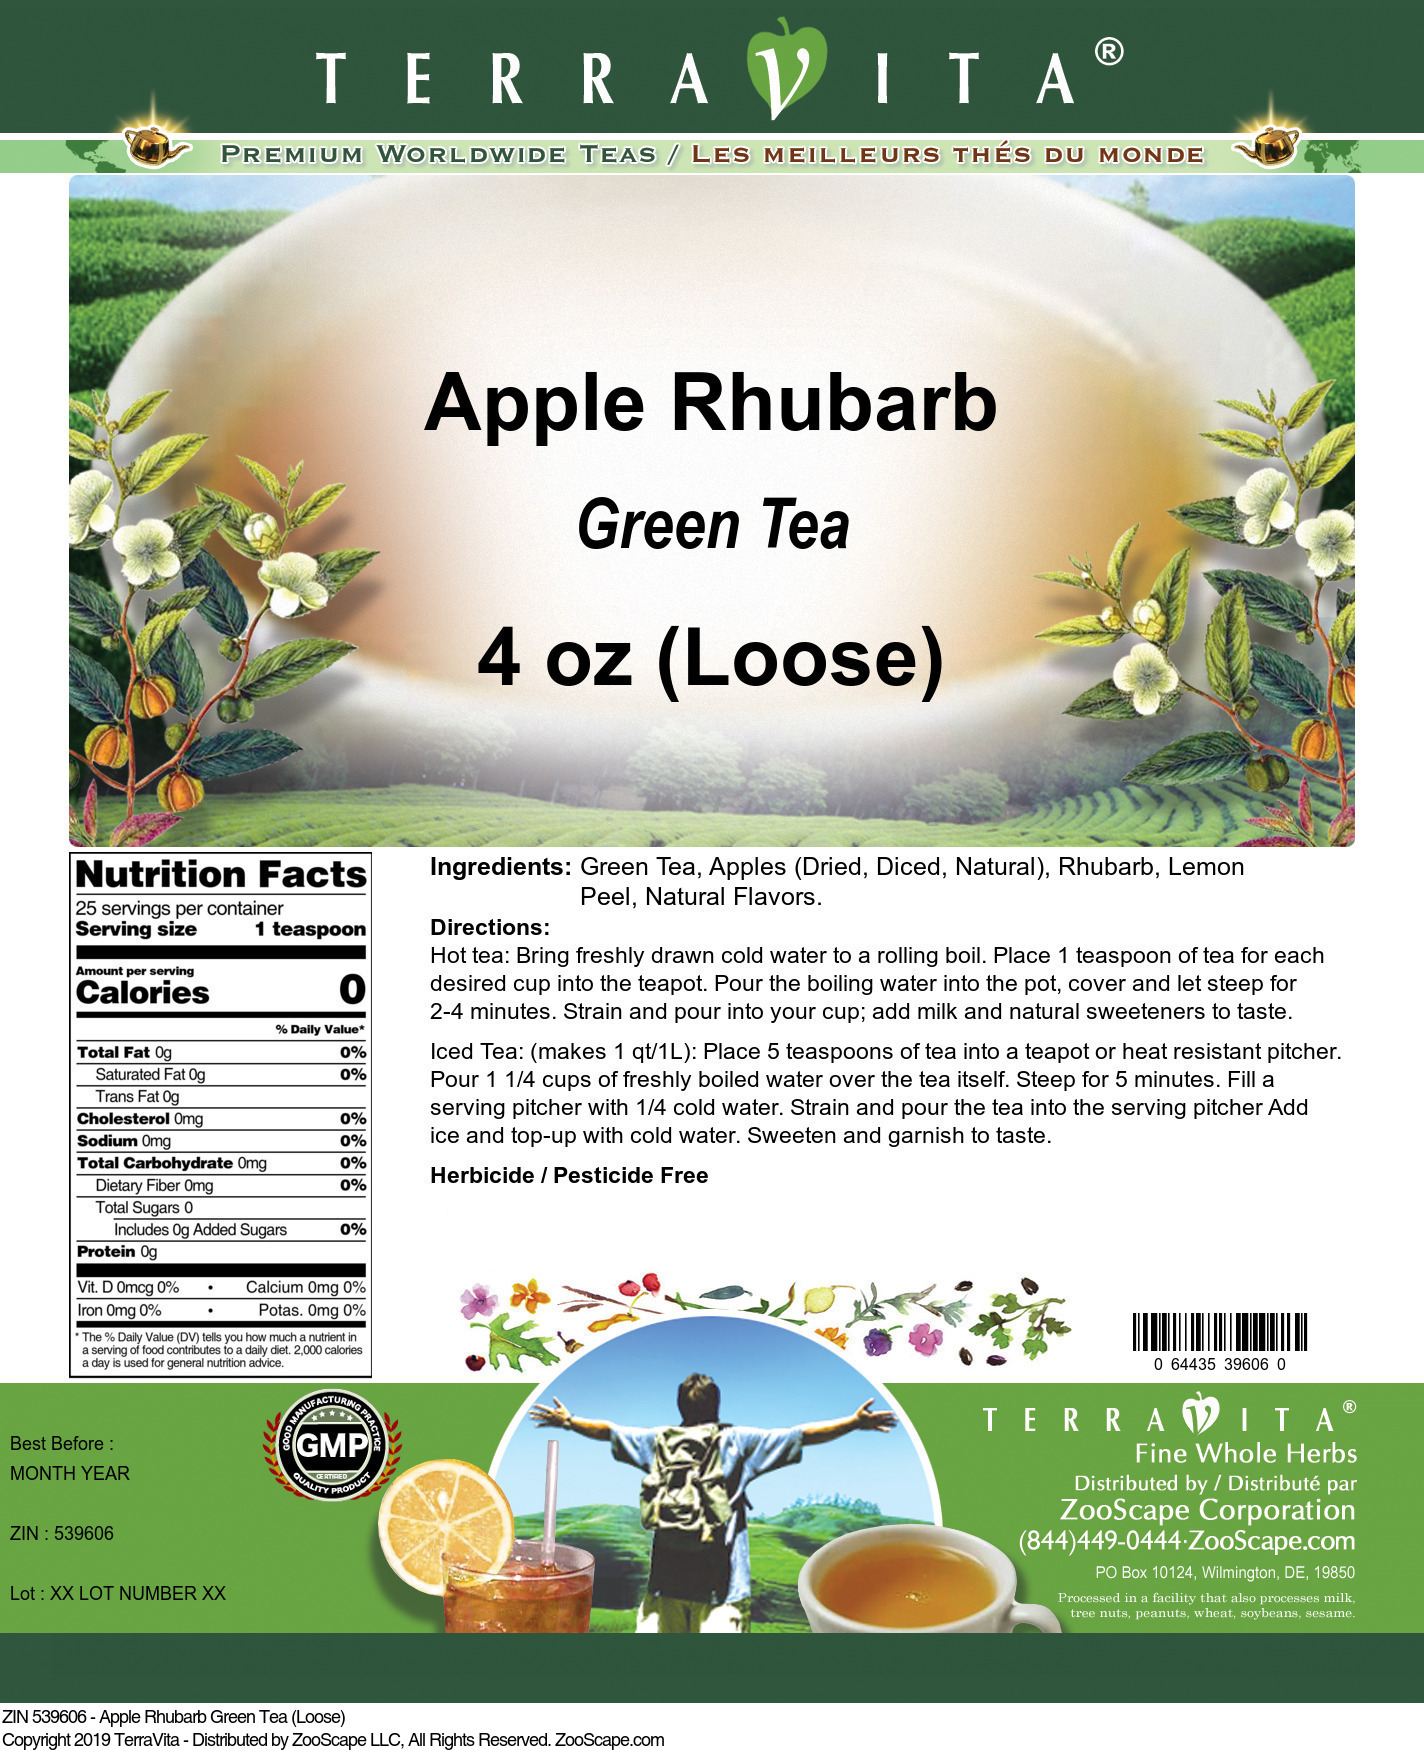 Apple Rhubarb Green Tea (Loose) - Label